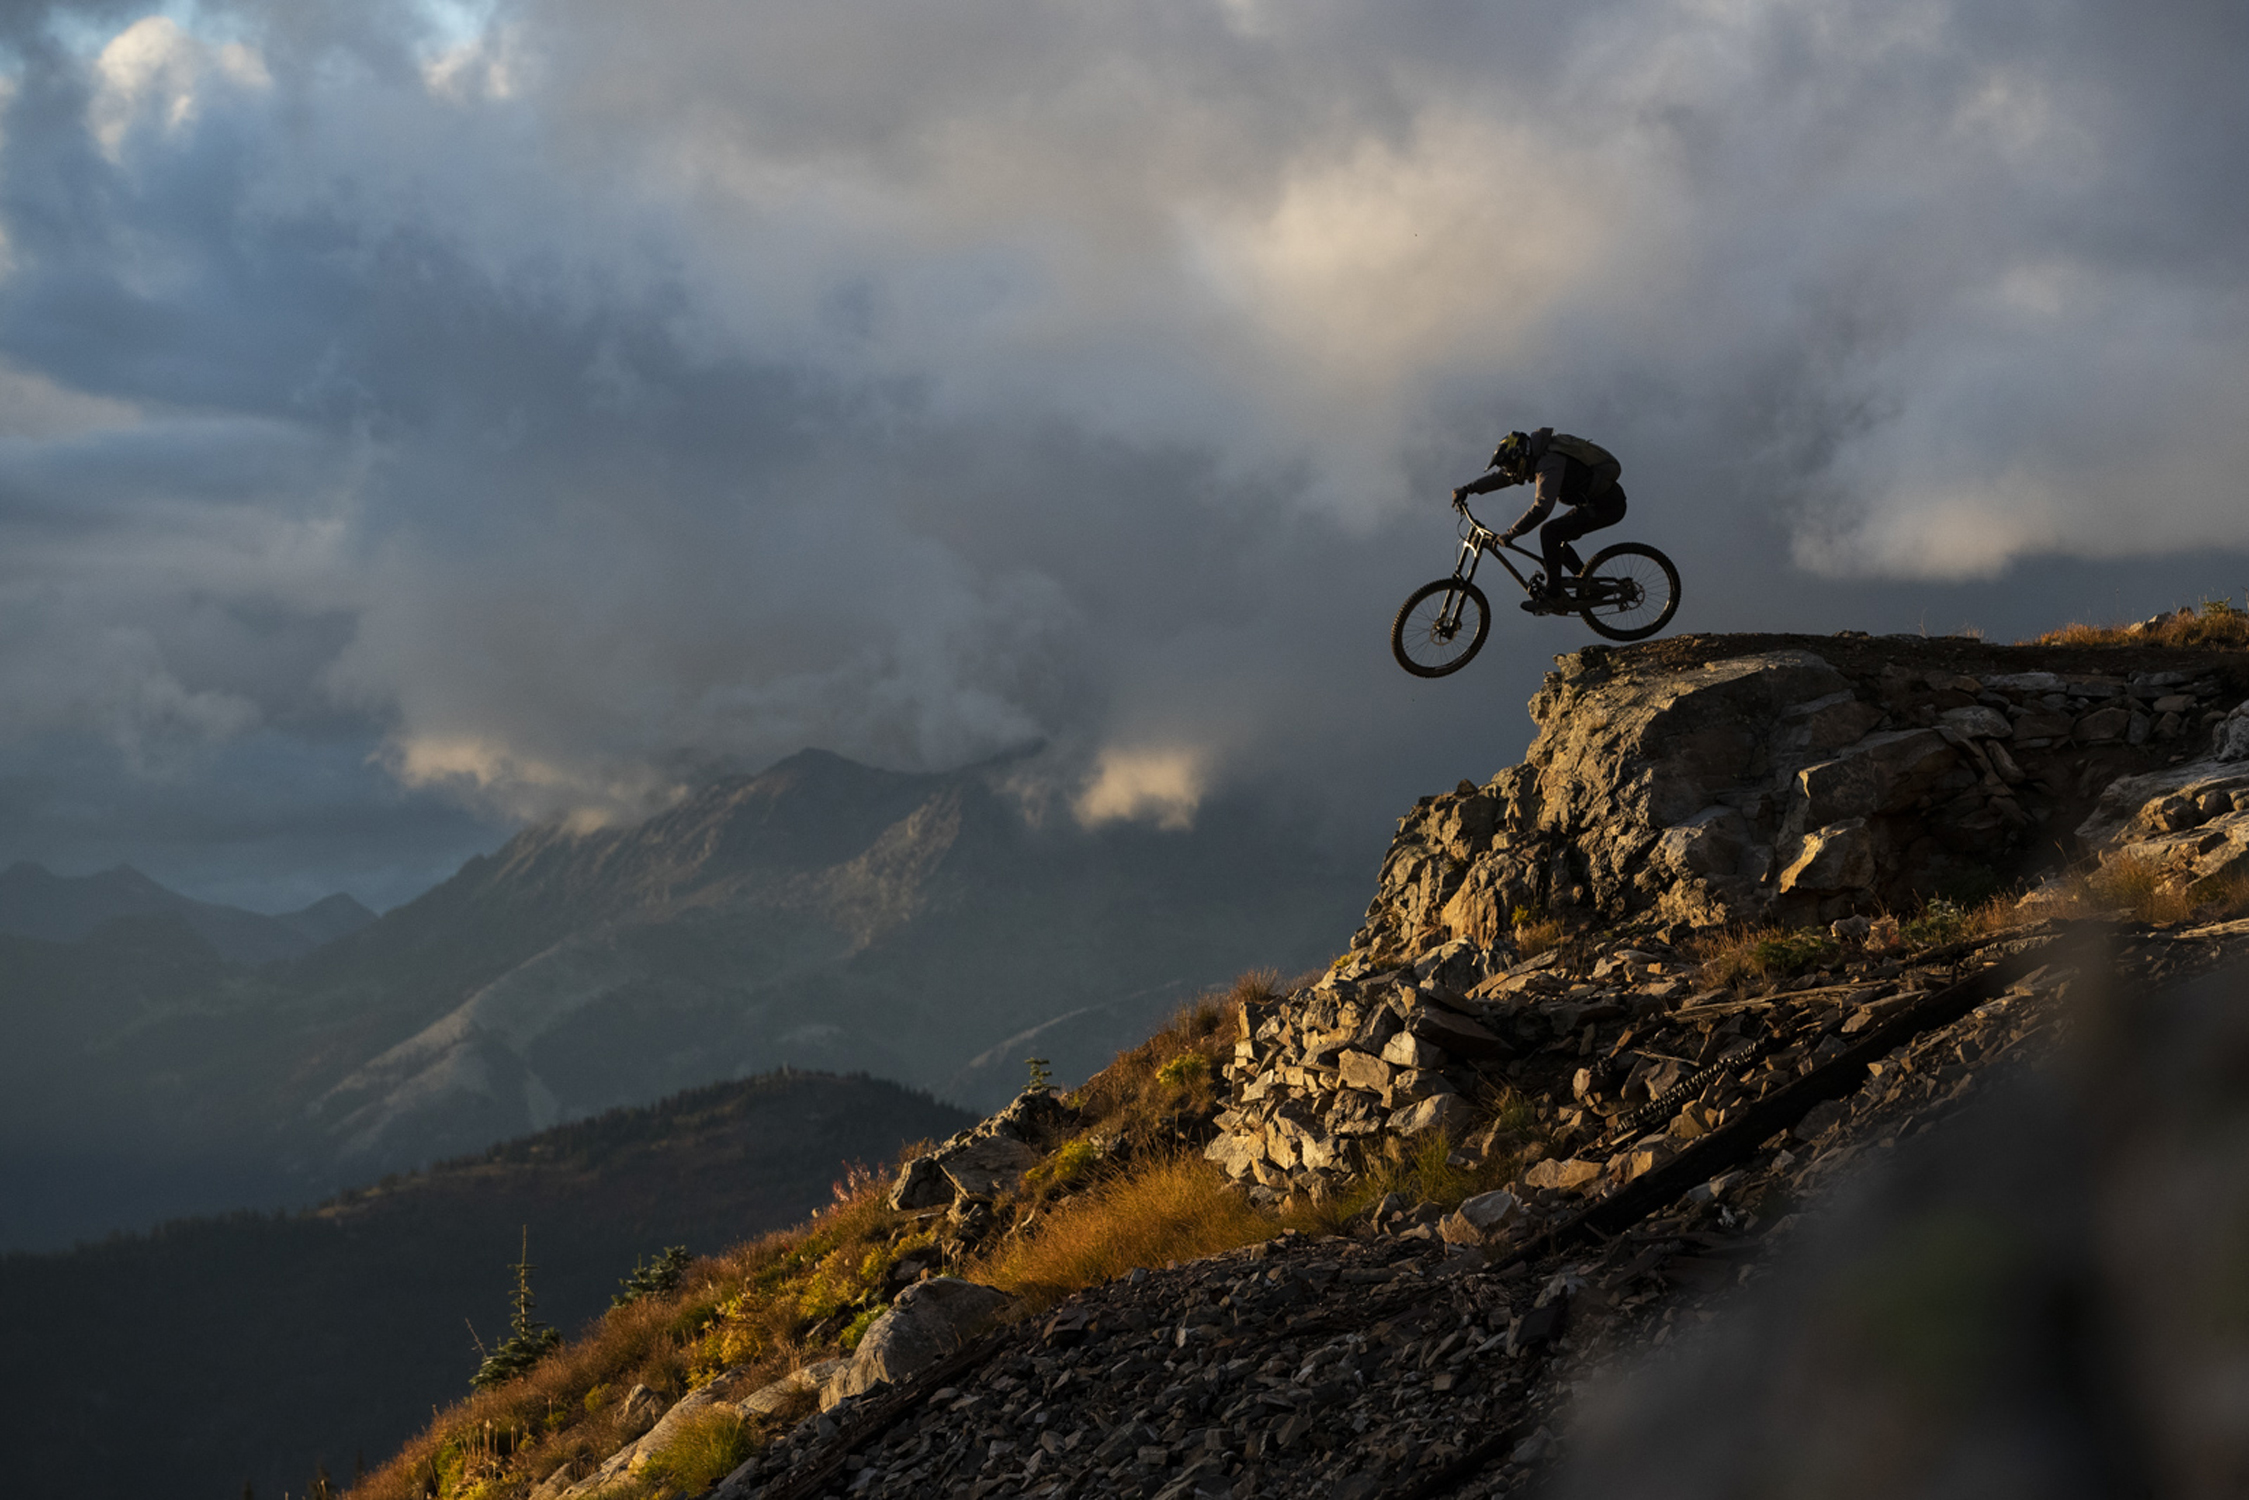 Kurt Sorge hitting a rock drop on his Evil downhill mountain bike 